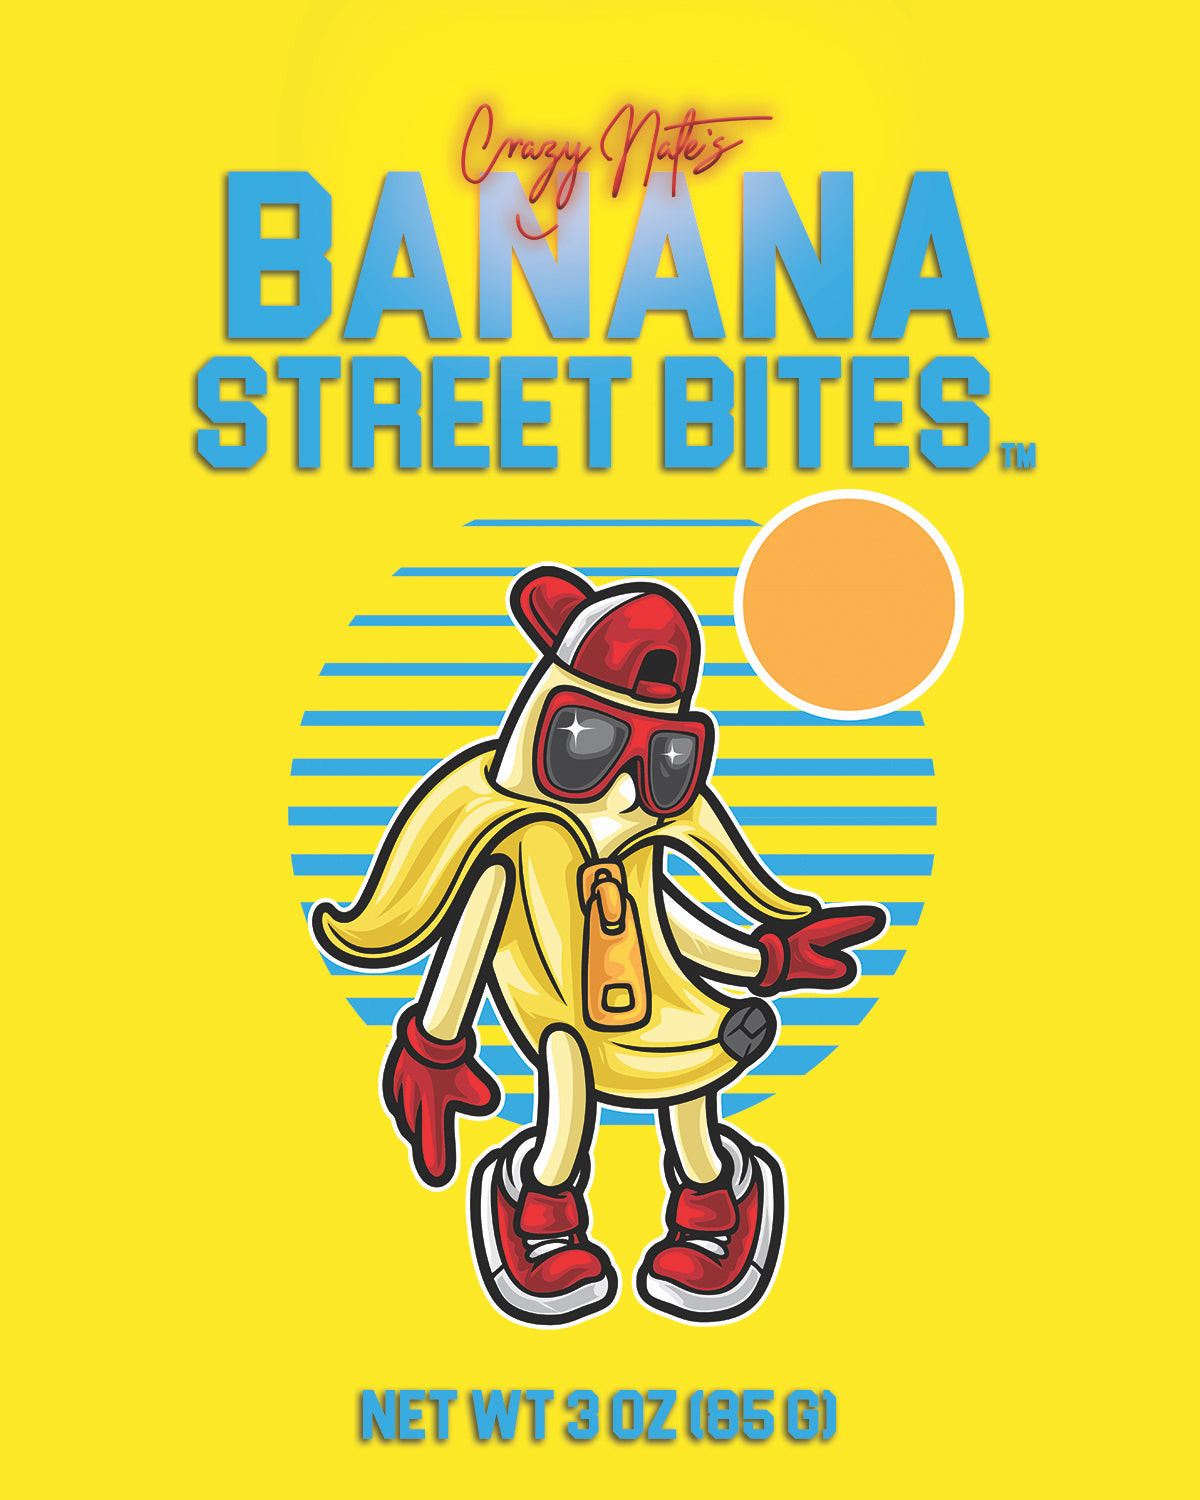 Banana Street Bites